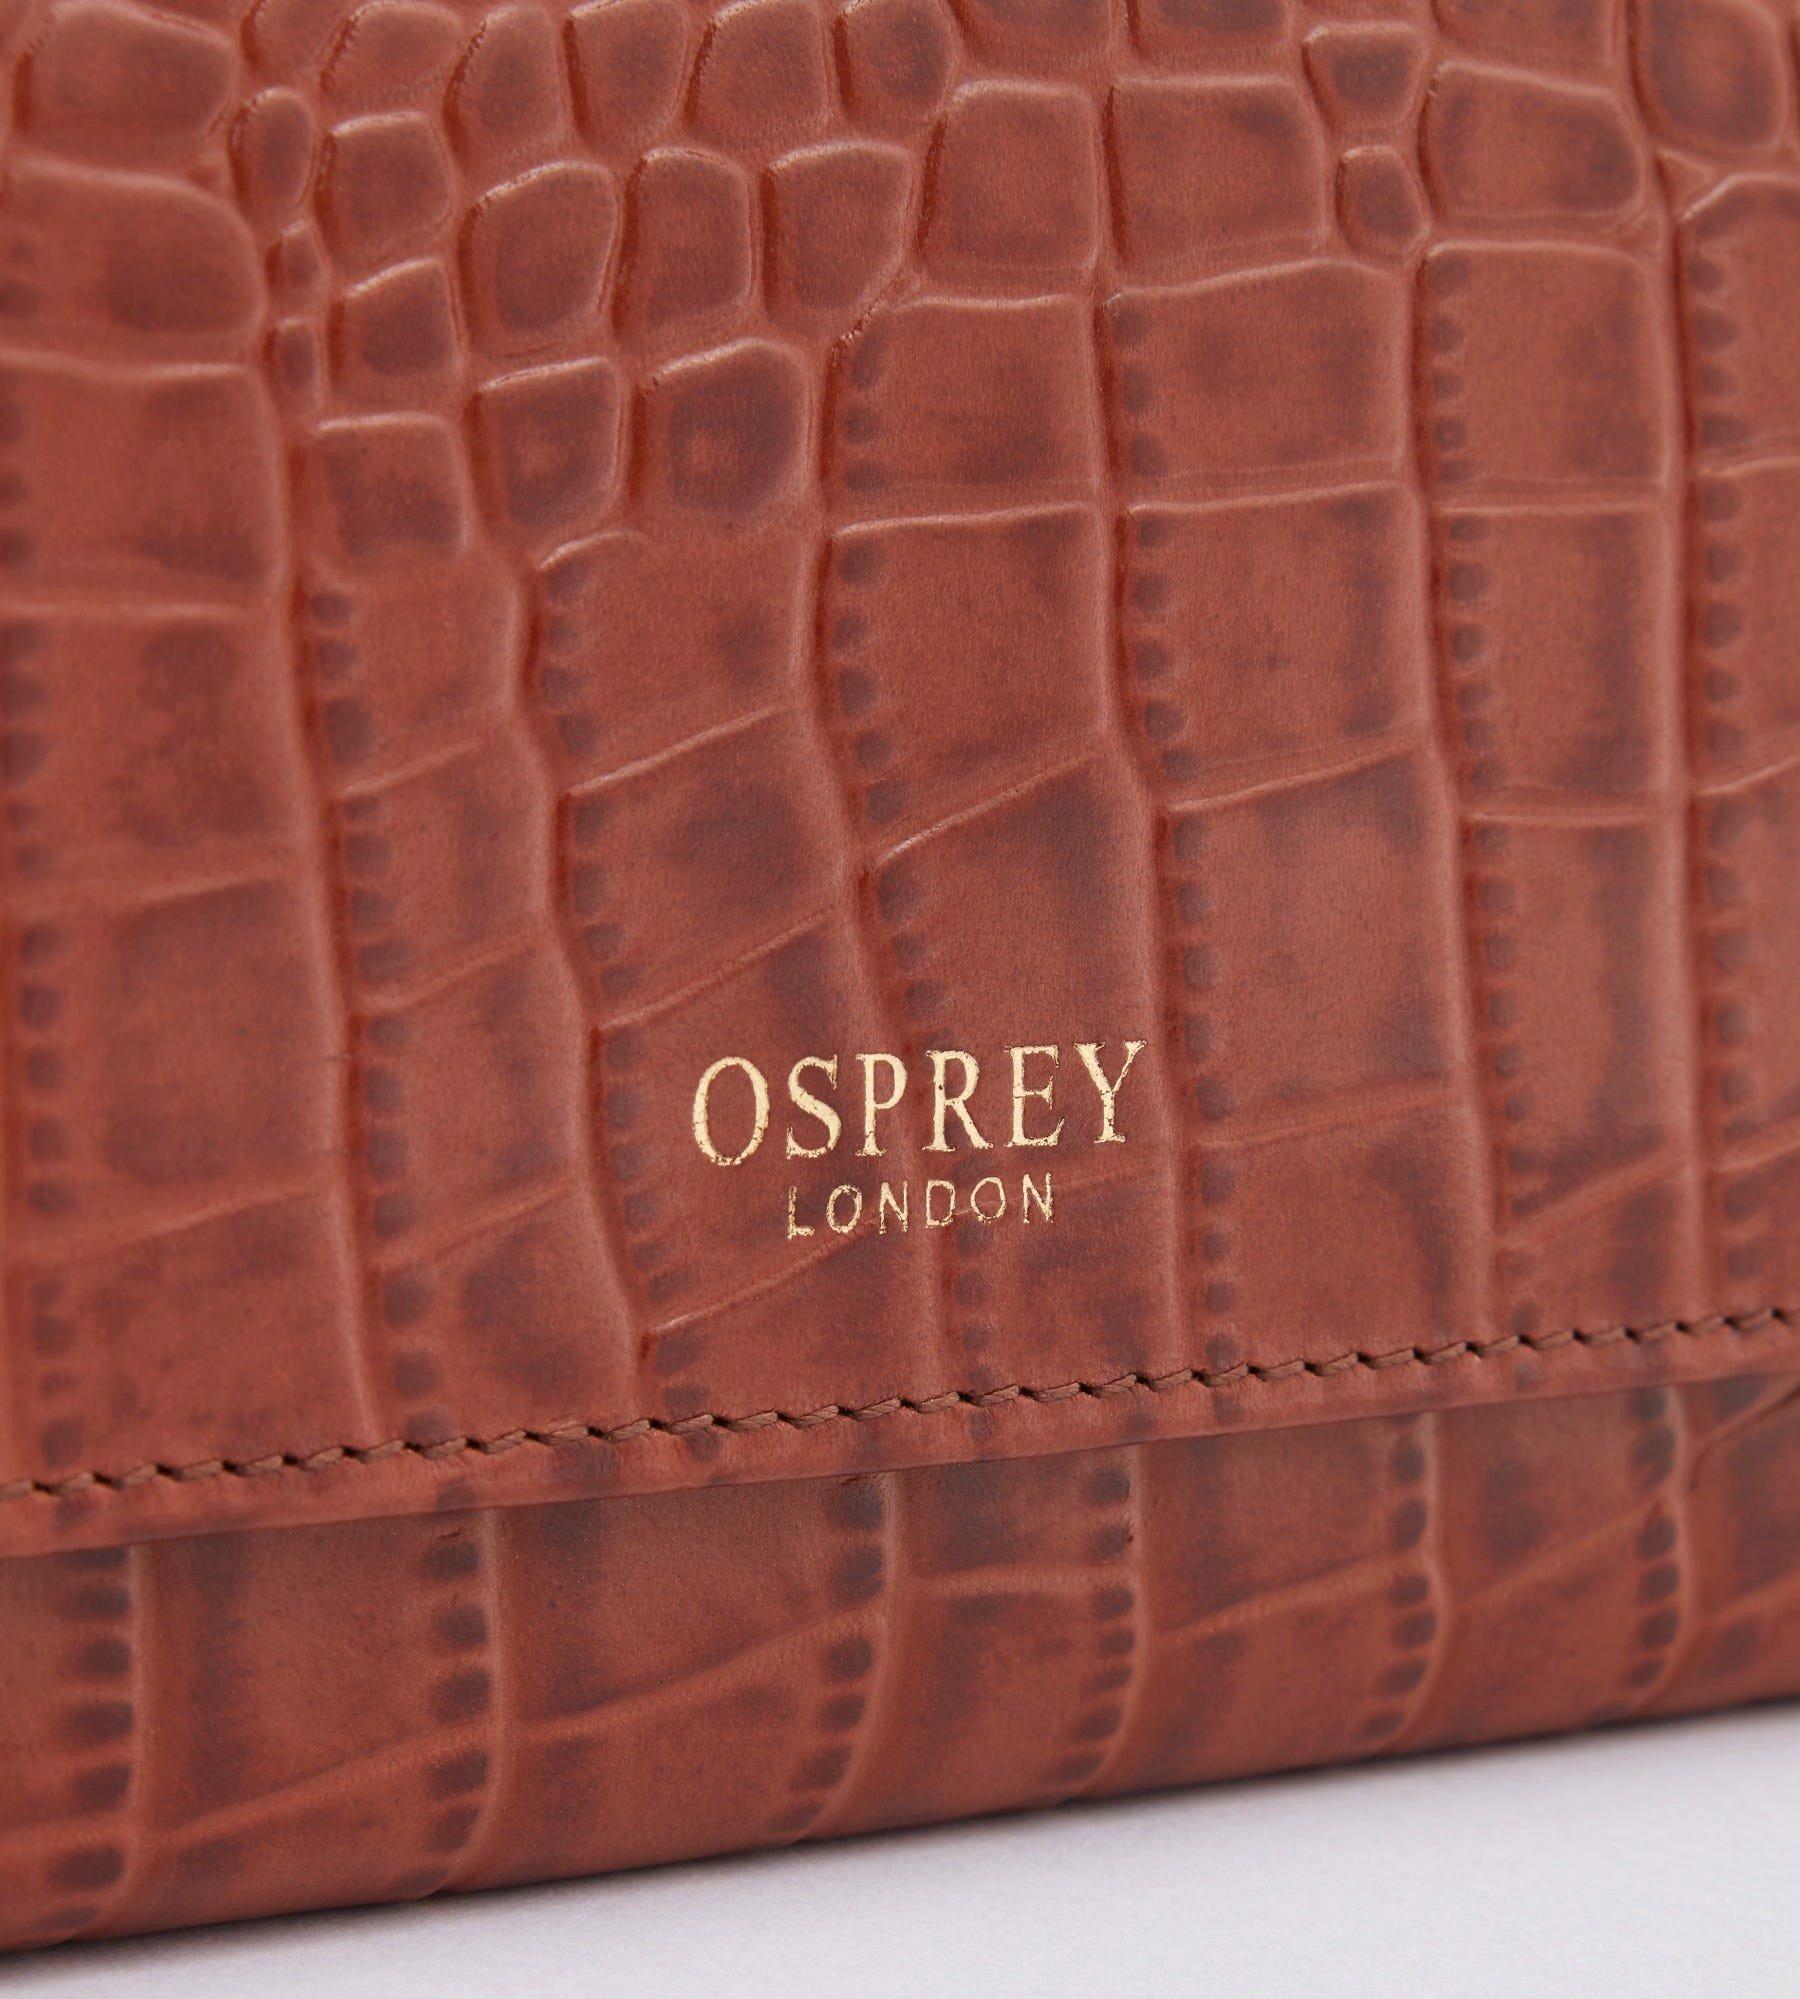 Osprey leather handbag - Gem